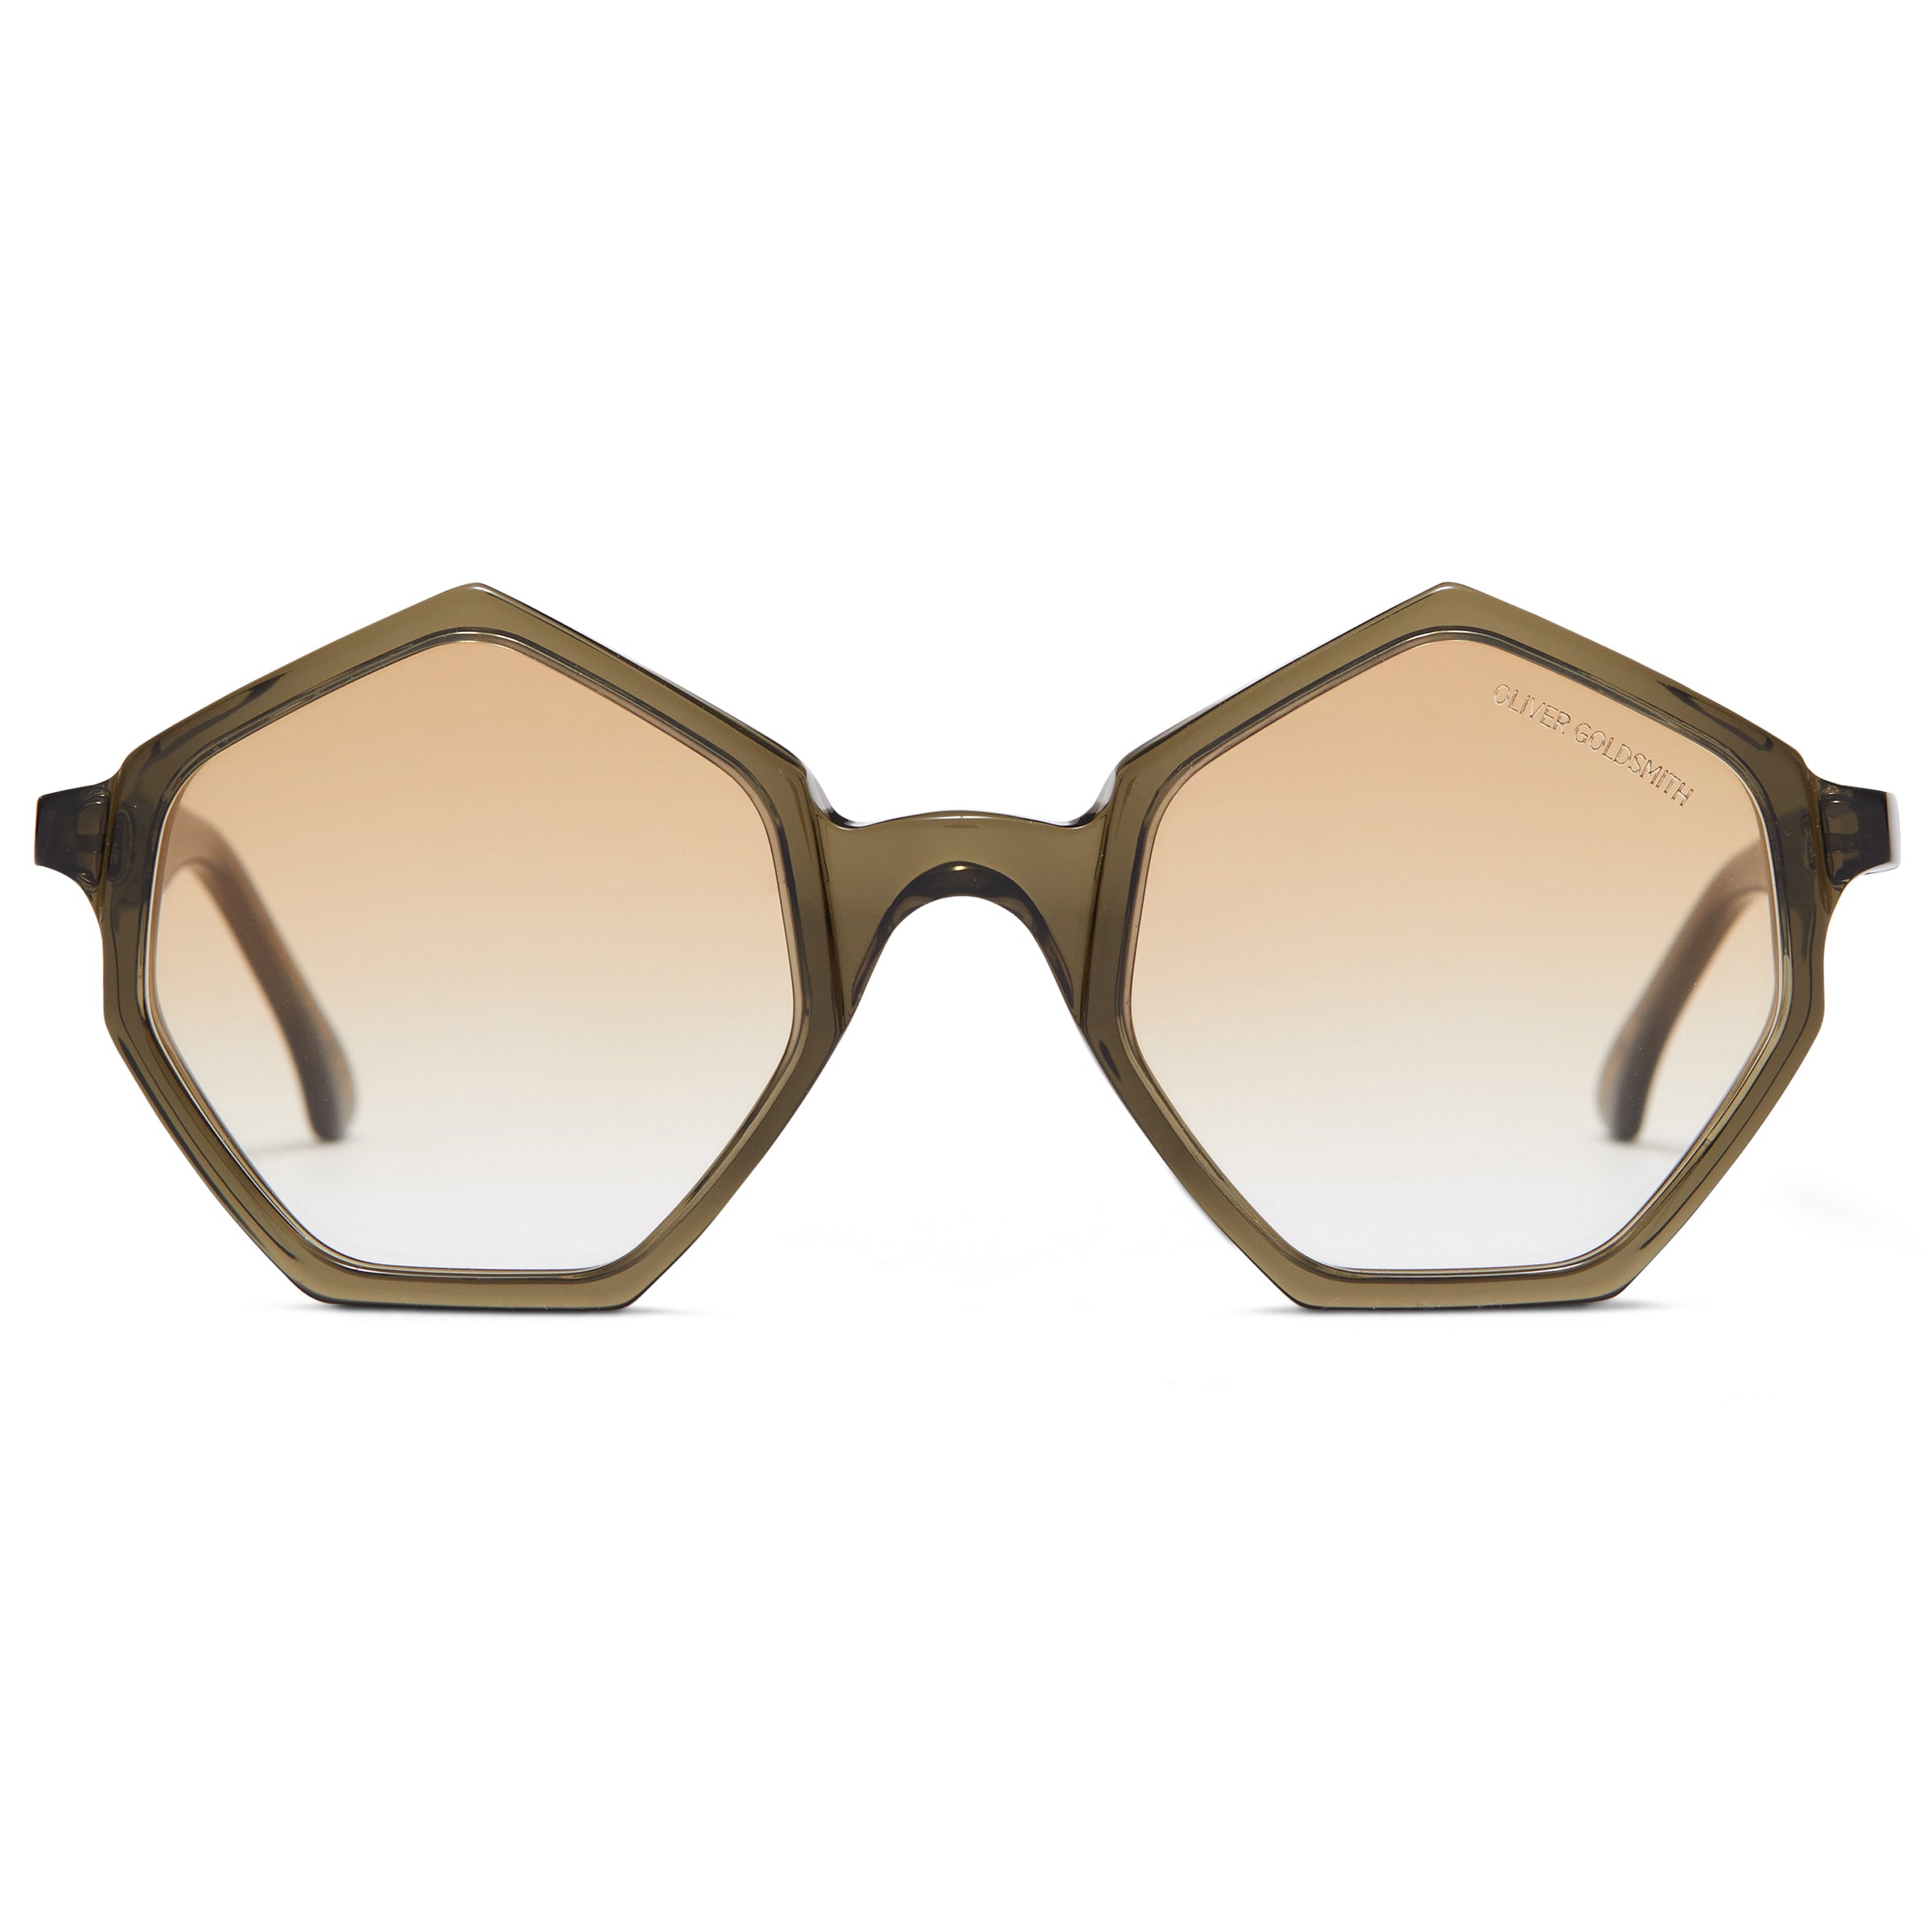 Optical Eyewear - Oval Shape, Plastic Half Rim Frame - Prescription  Eyeglasses RX, Black Honey 